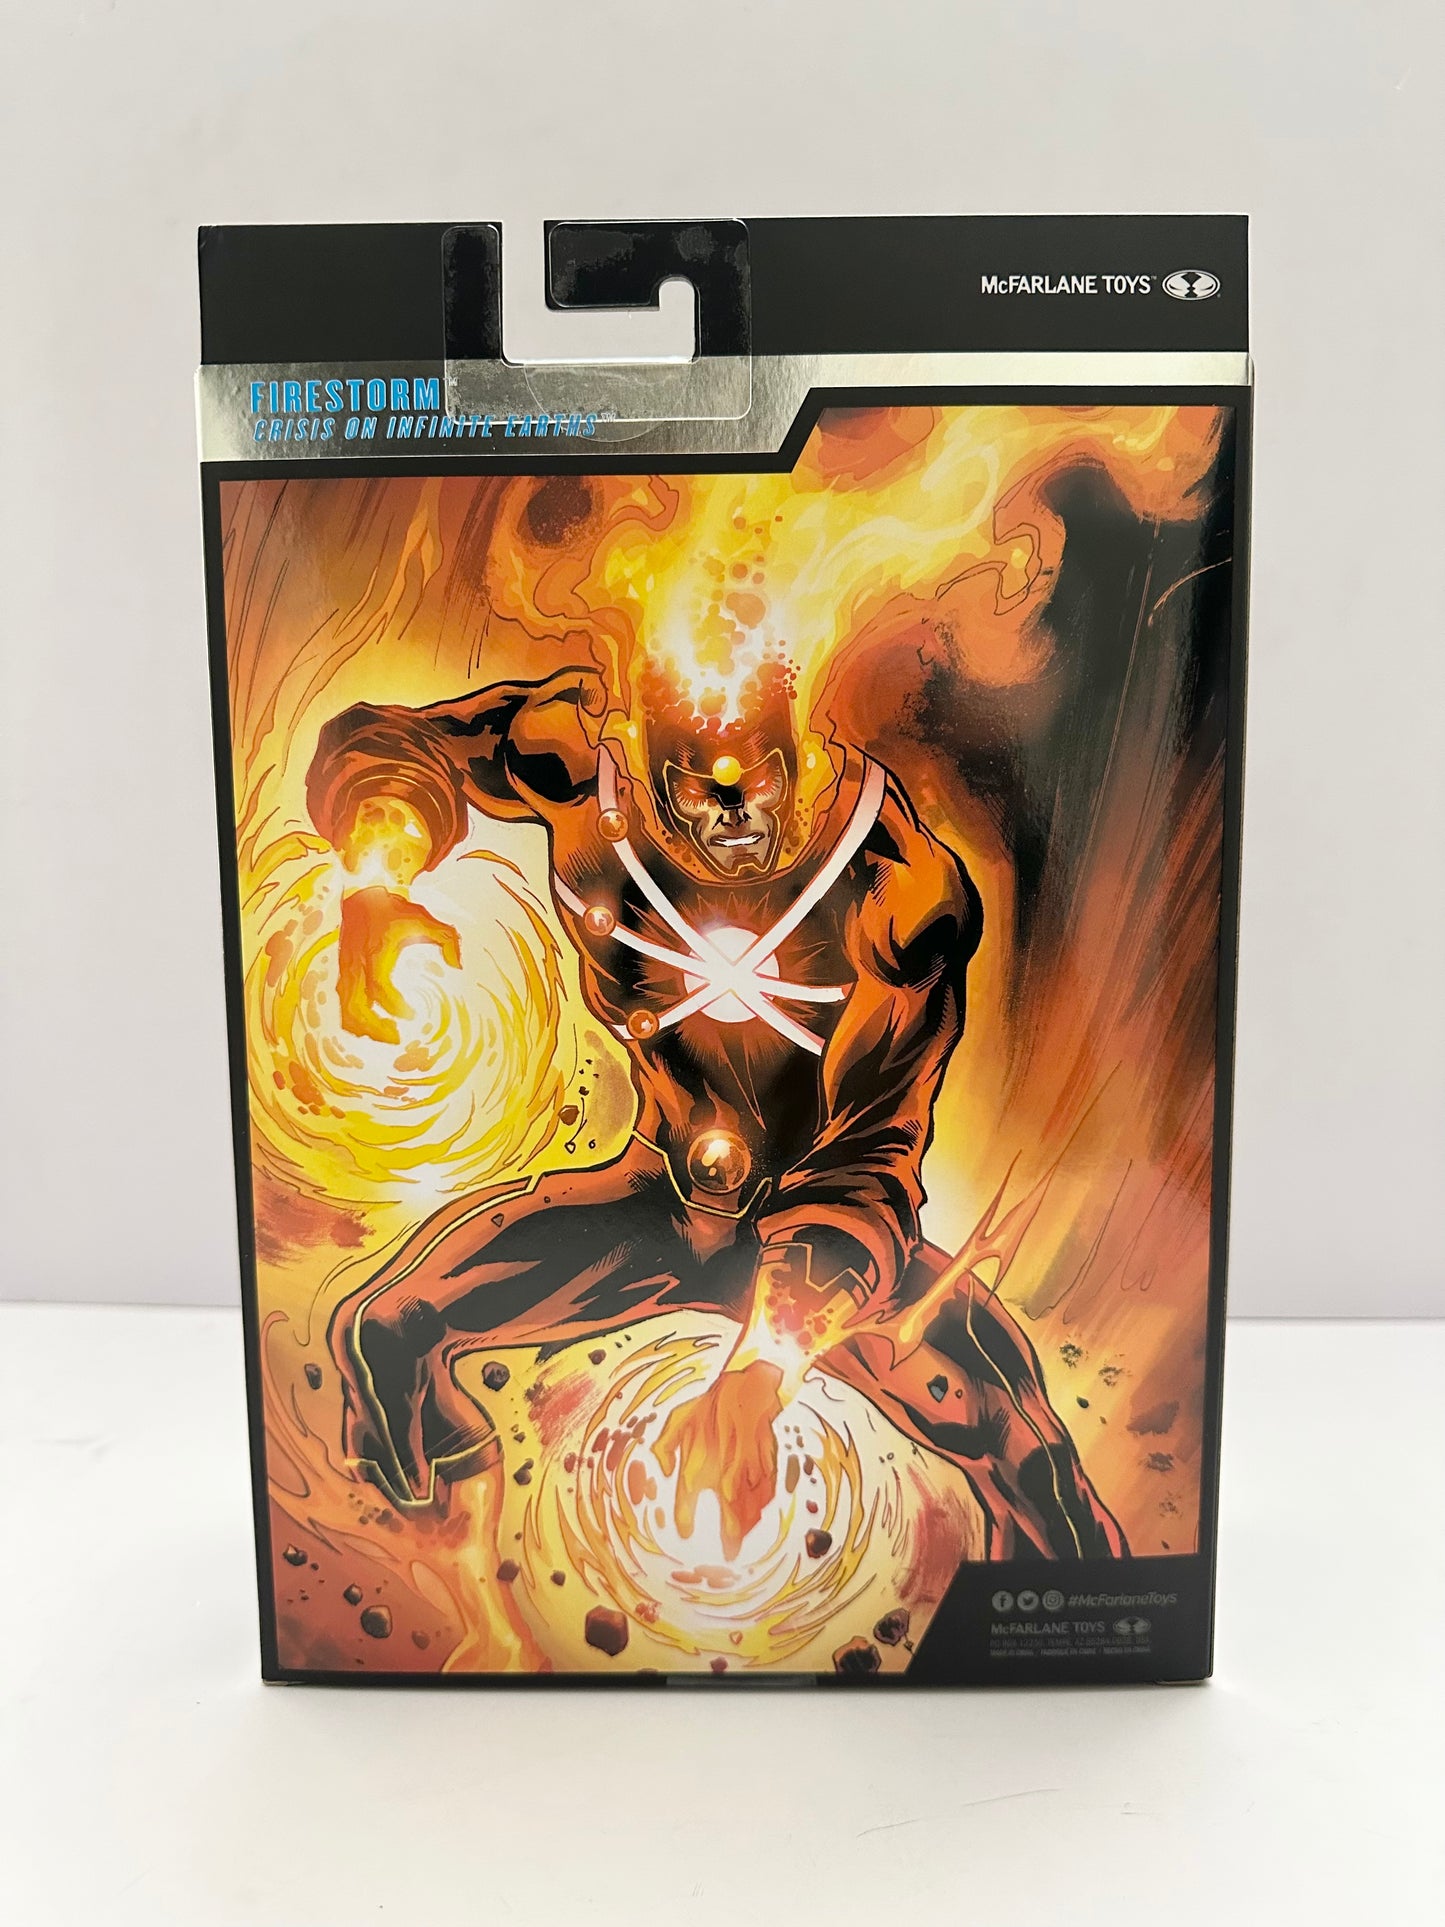 DC Multiverse Collector Edition Firestorm